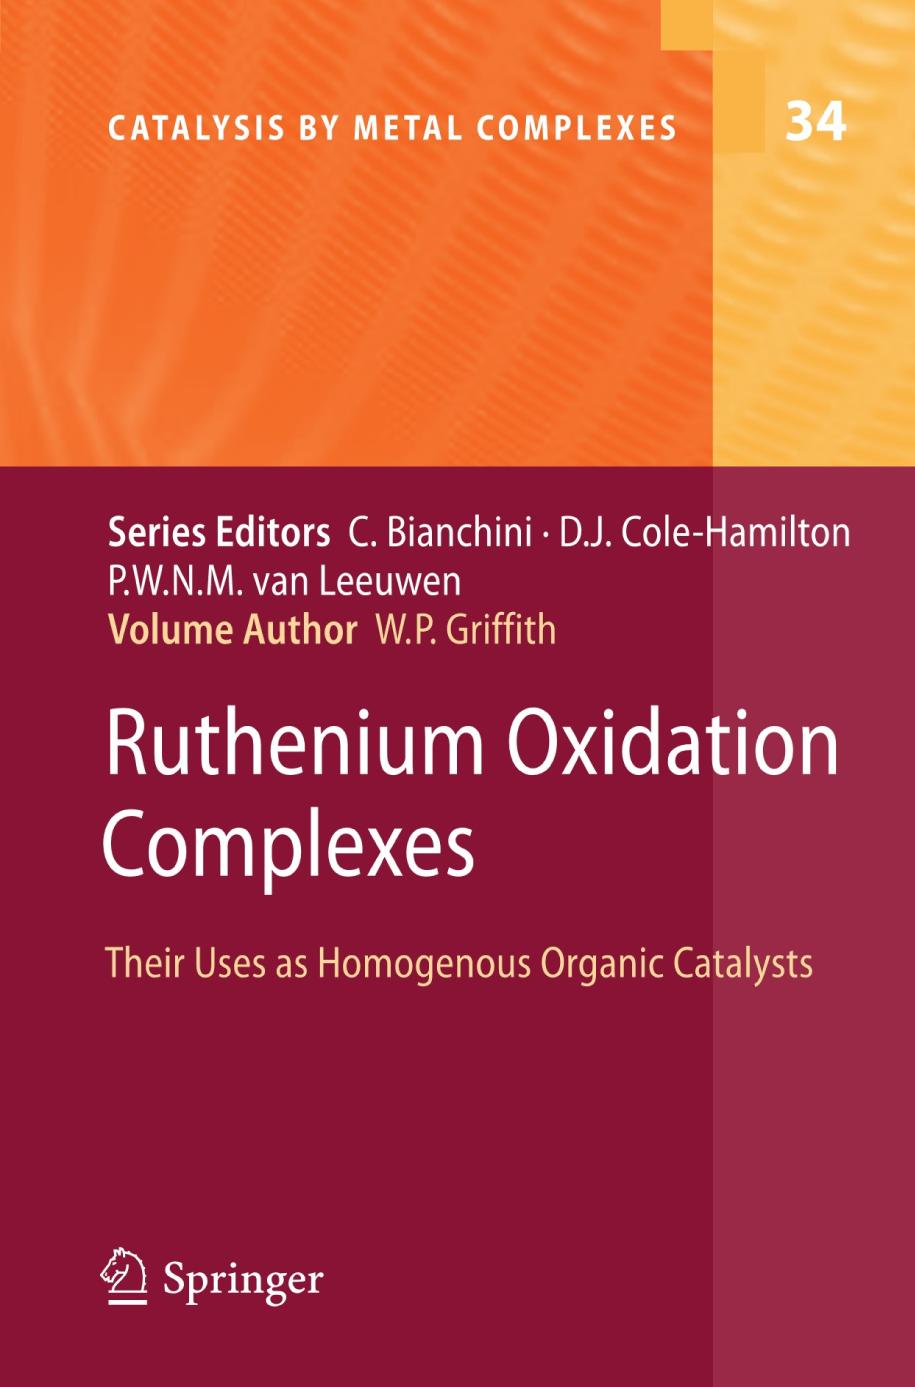 Ruthenium Oxidation Complexes